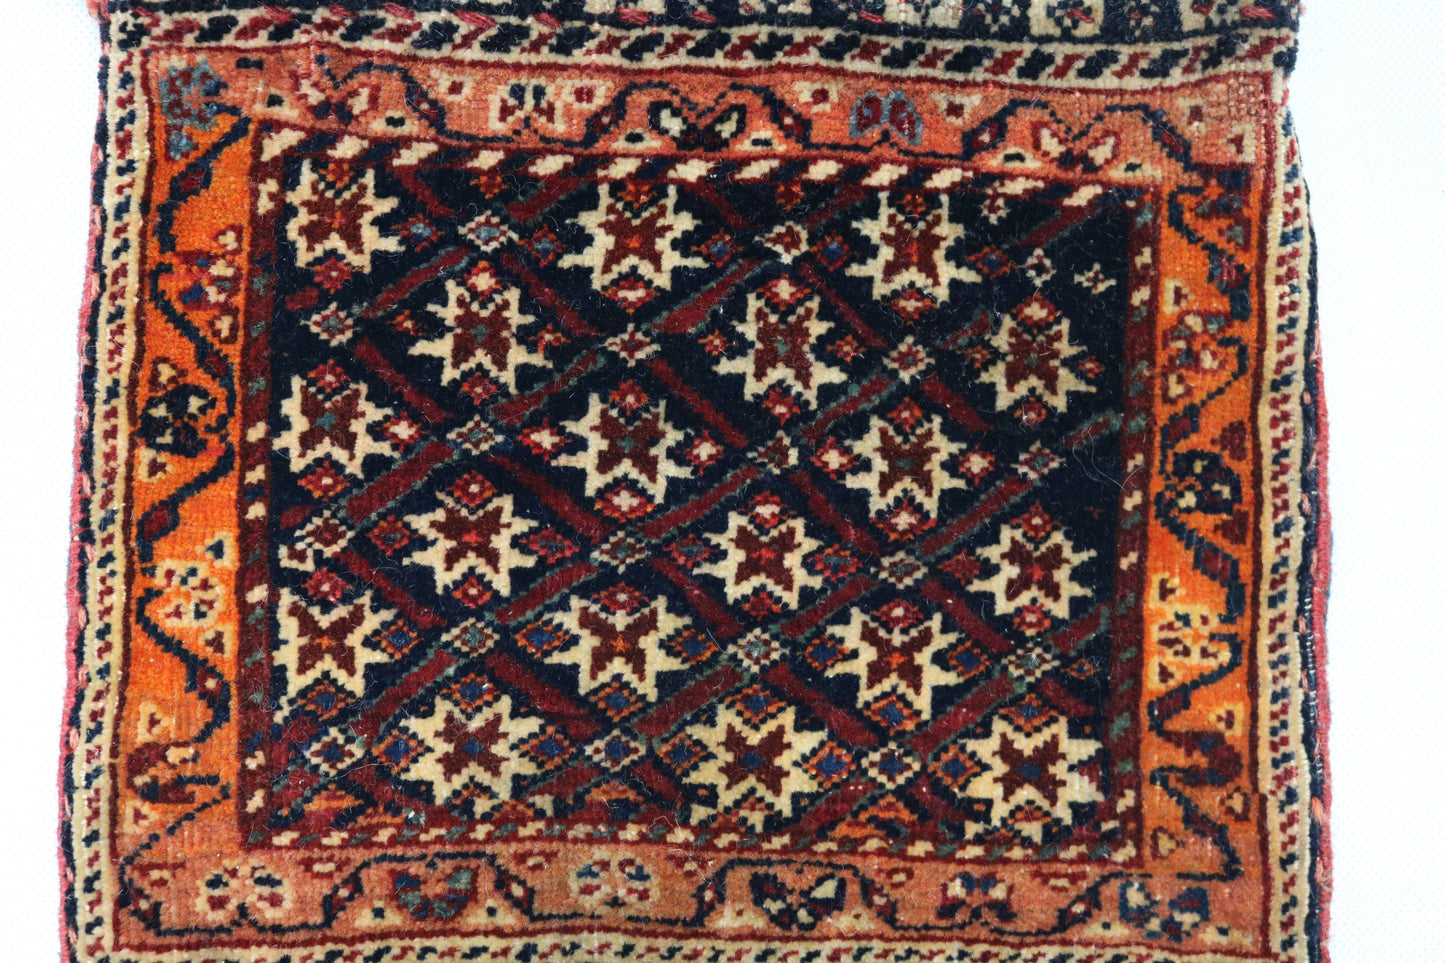 Antique Persian Qashqai small bag - Hakiemie Rug Gallery